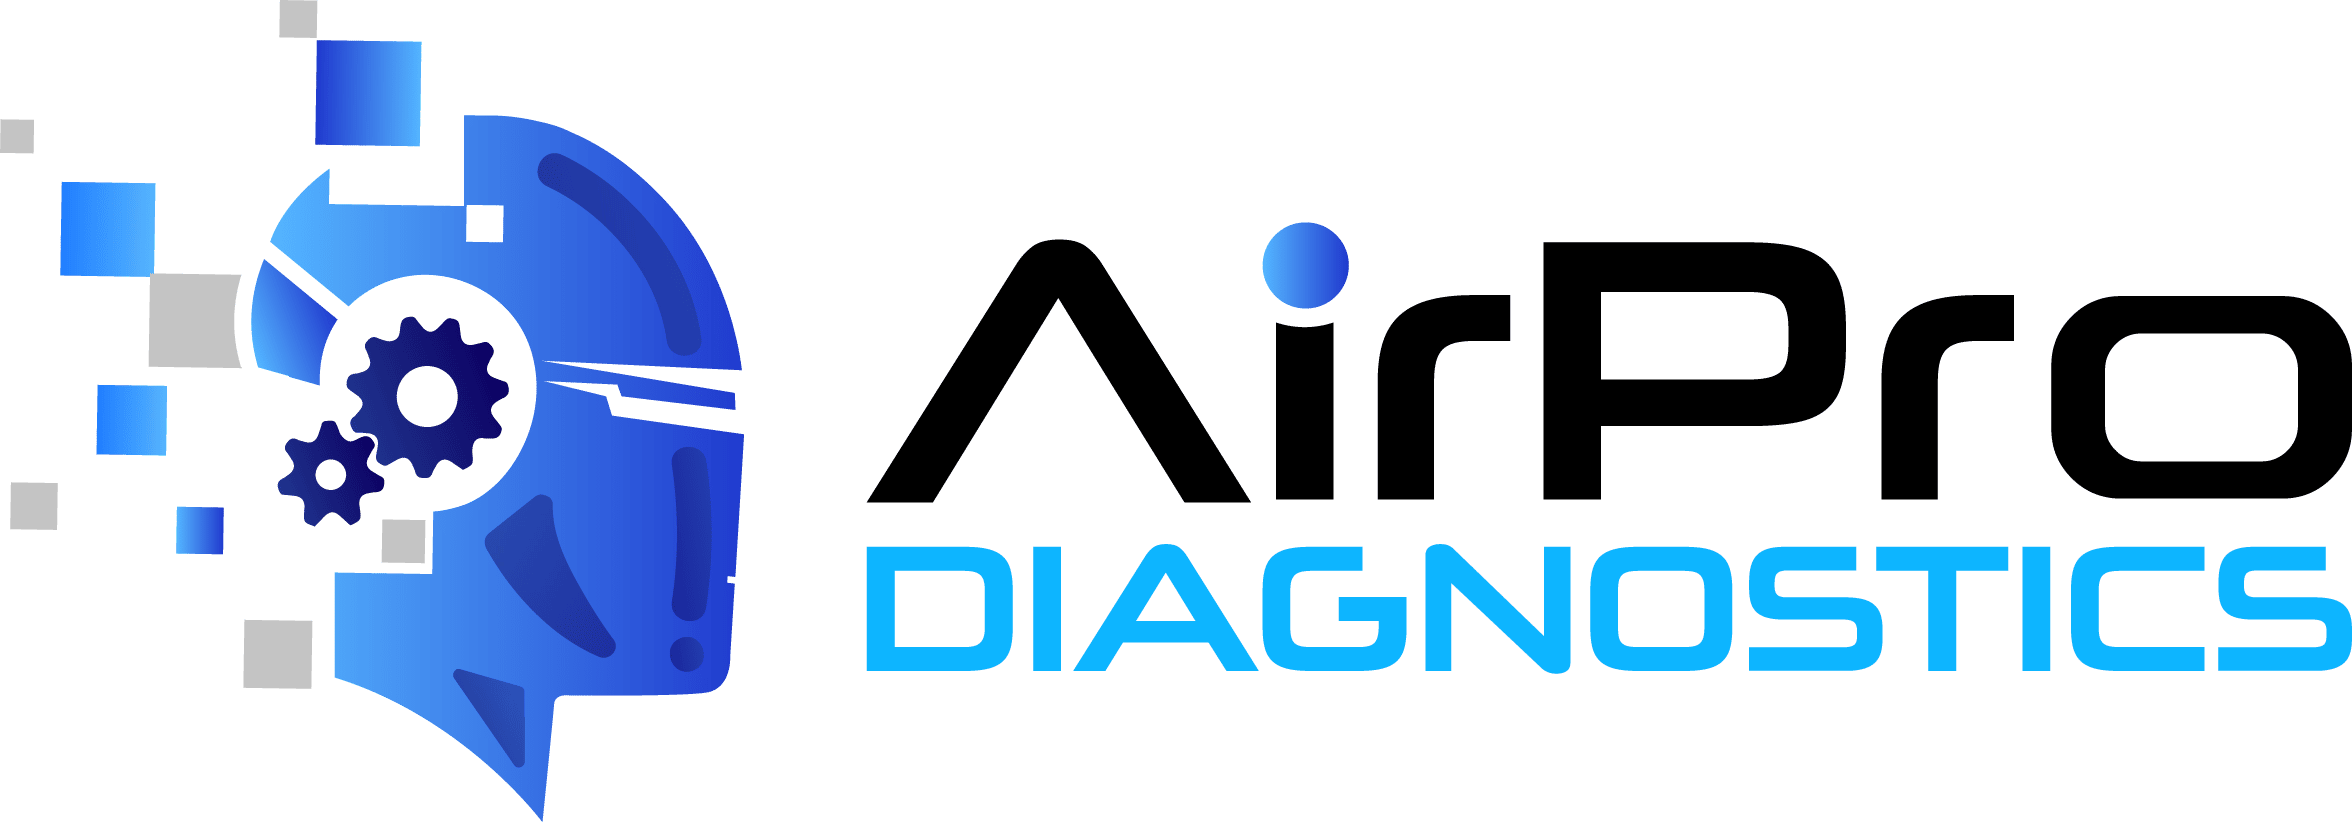 AirPro Diagnostics | Remote Diagnostics & ADAS Scanning | Press Releases - AirPro Diagnostics